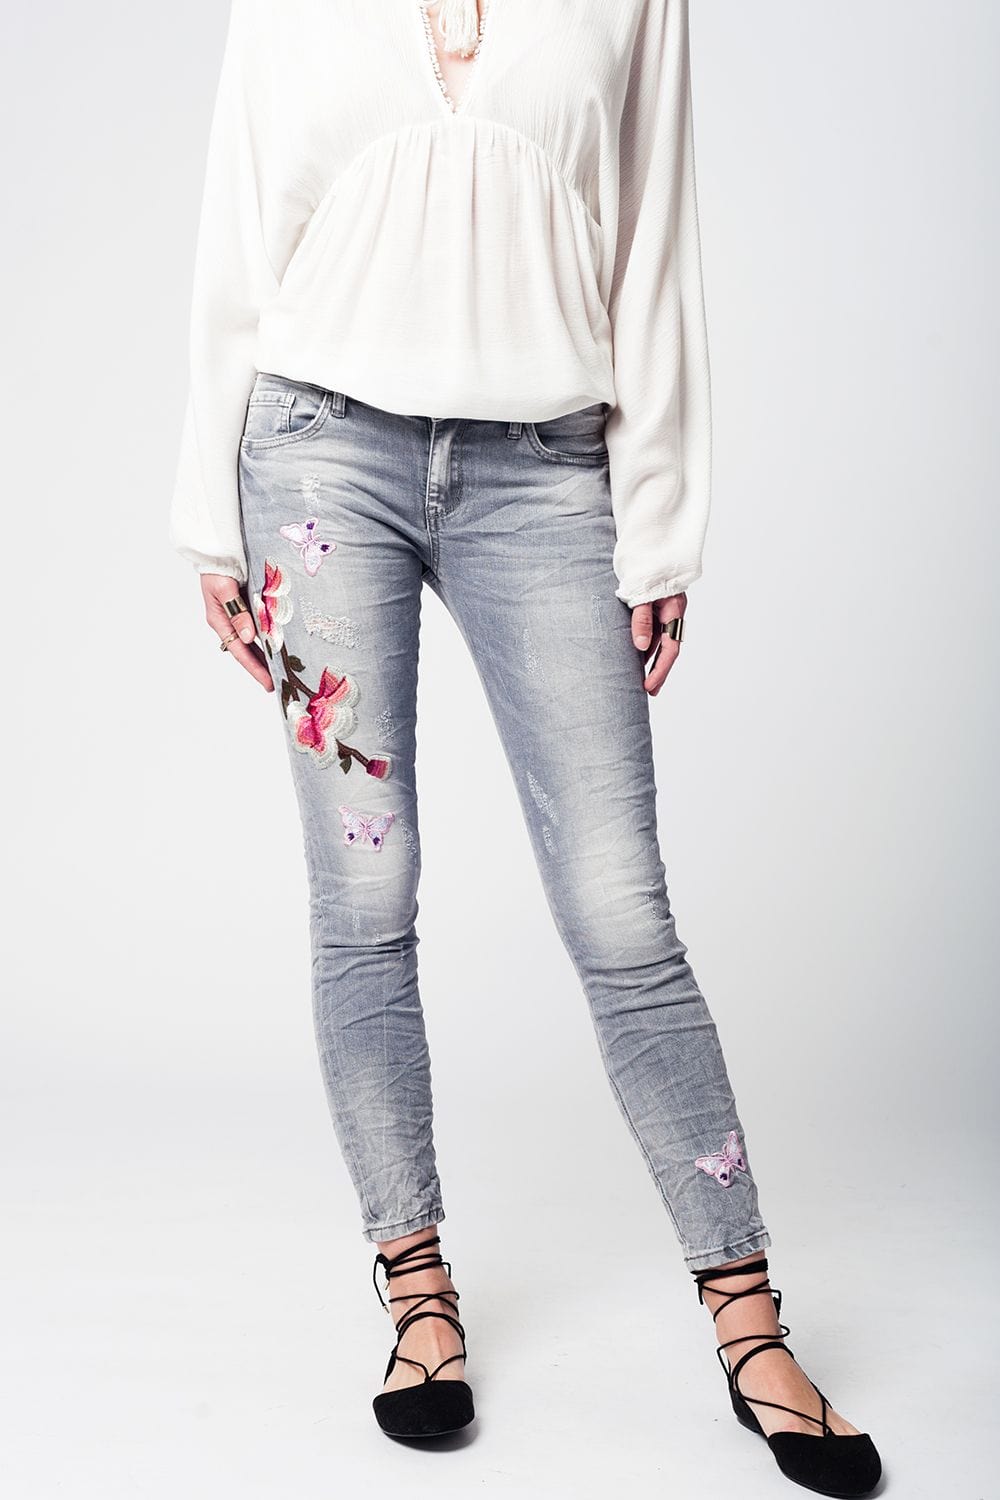 Q2 Women's Jean Gray slim denim embroidered jeans